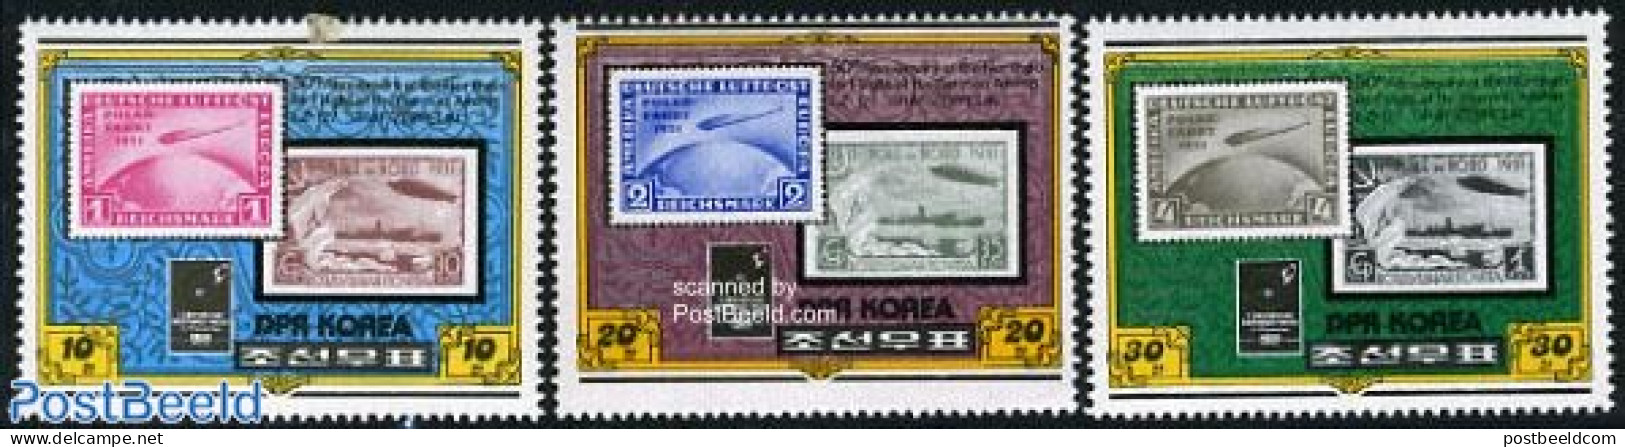 Korea, North 1980 Int. Stamp Fair Essen 3v, Mint NH, Transport - Stamps On Stamps - Ships And Boats - Zeppelins - Briefmarken Auf Briefmarken